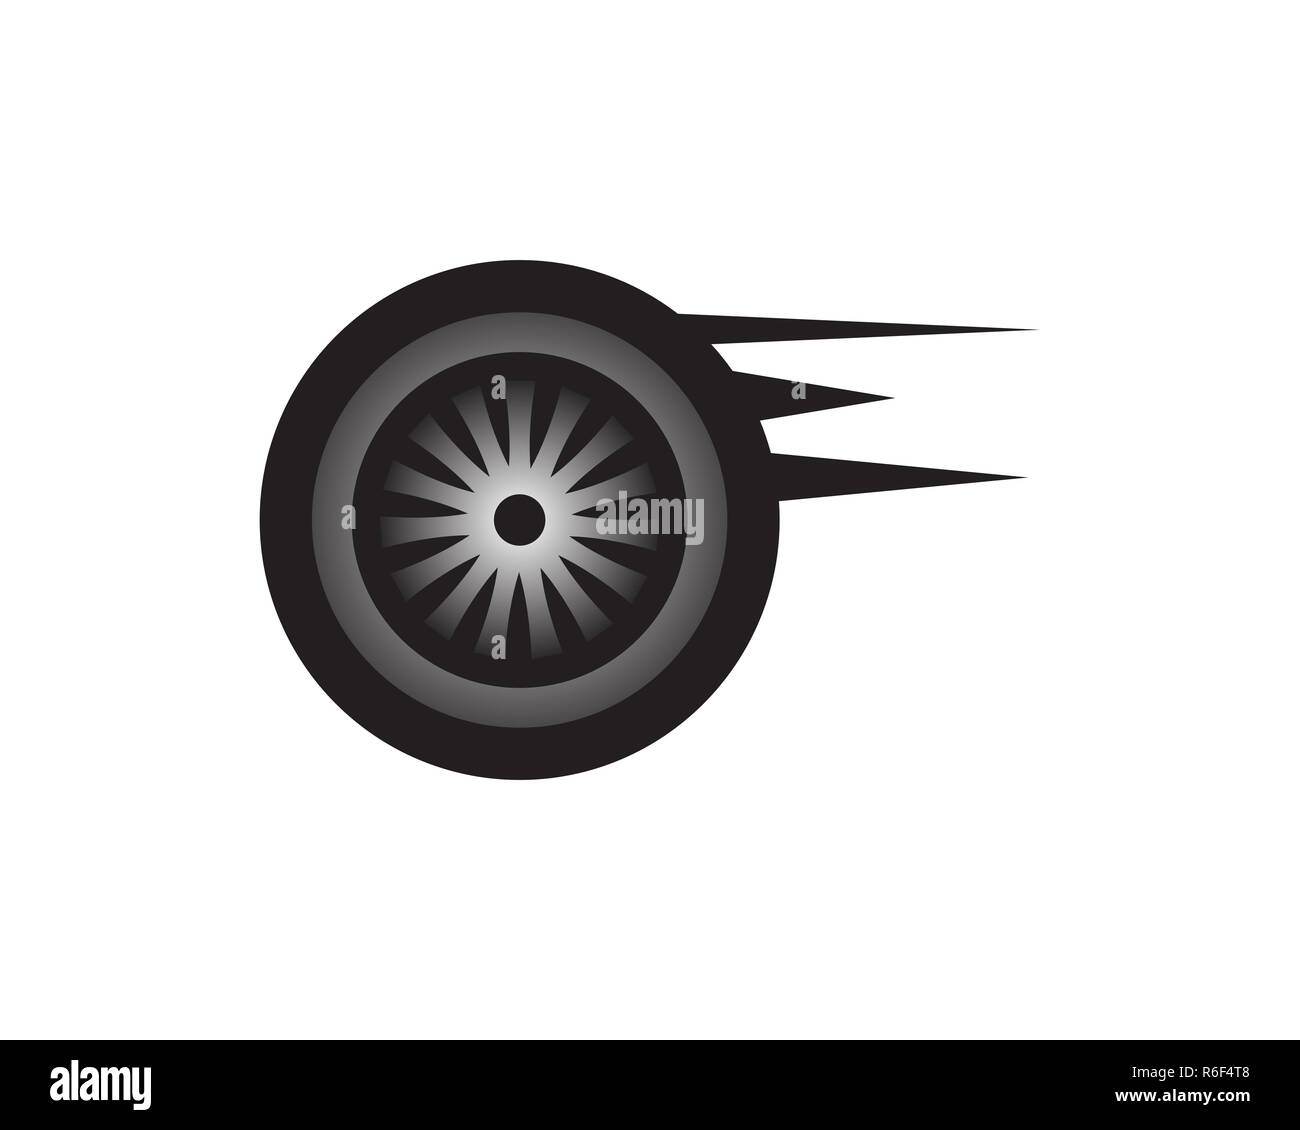 Fast logo dei pneumatici Foto stock - Alamy